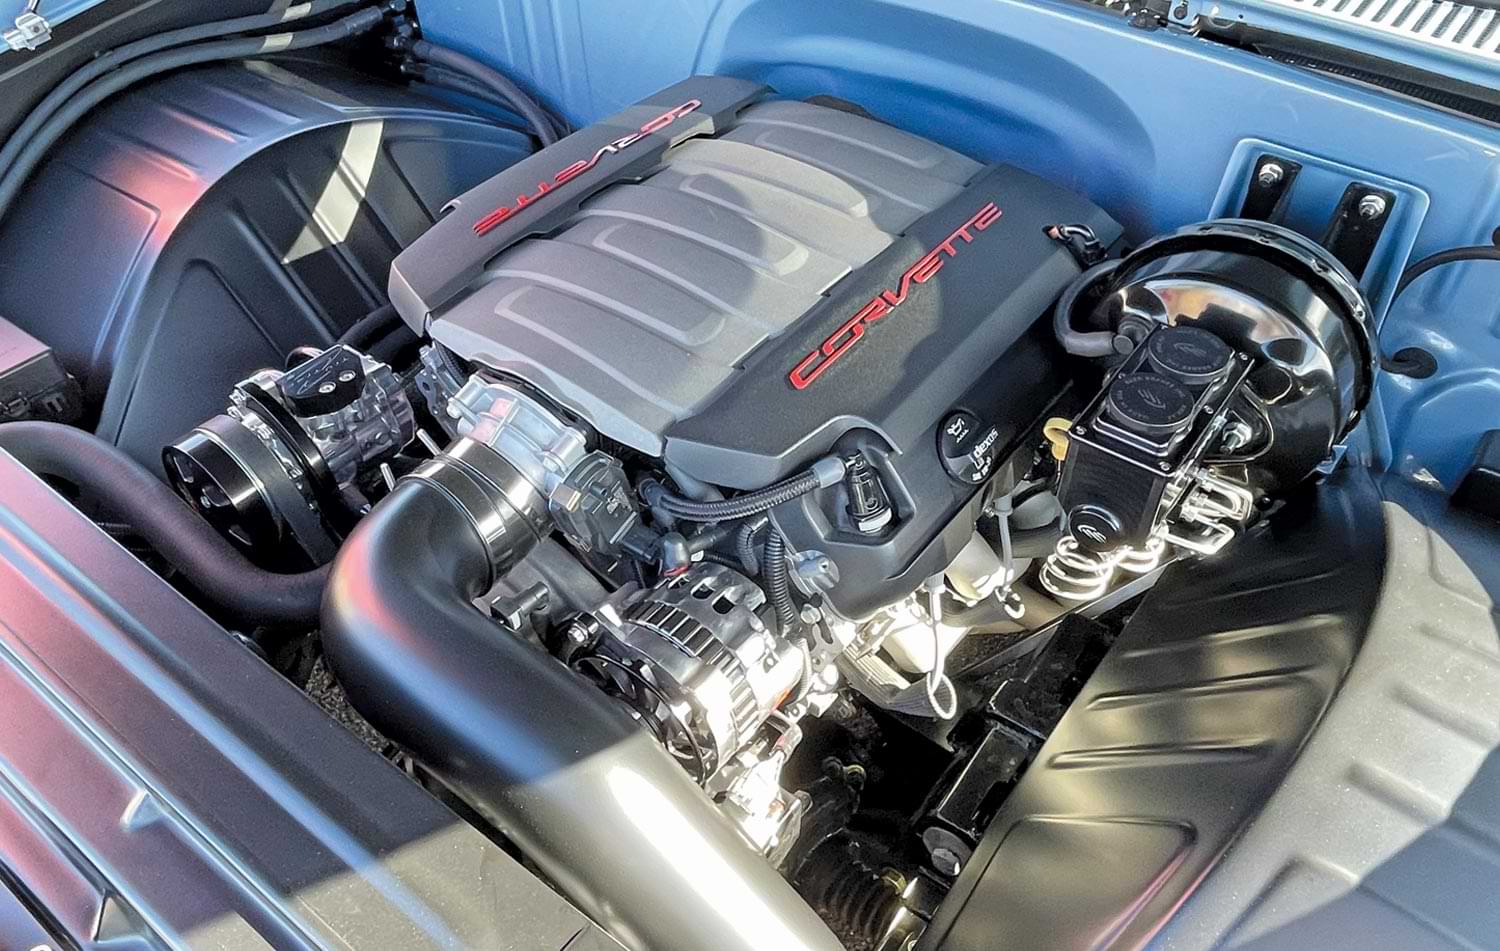 view of a Corvette engine under a hood